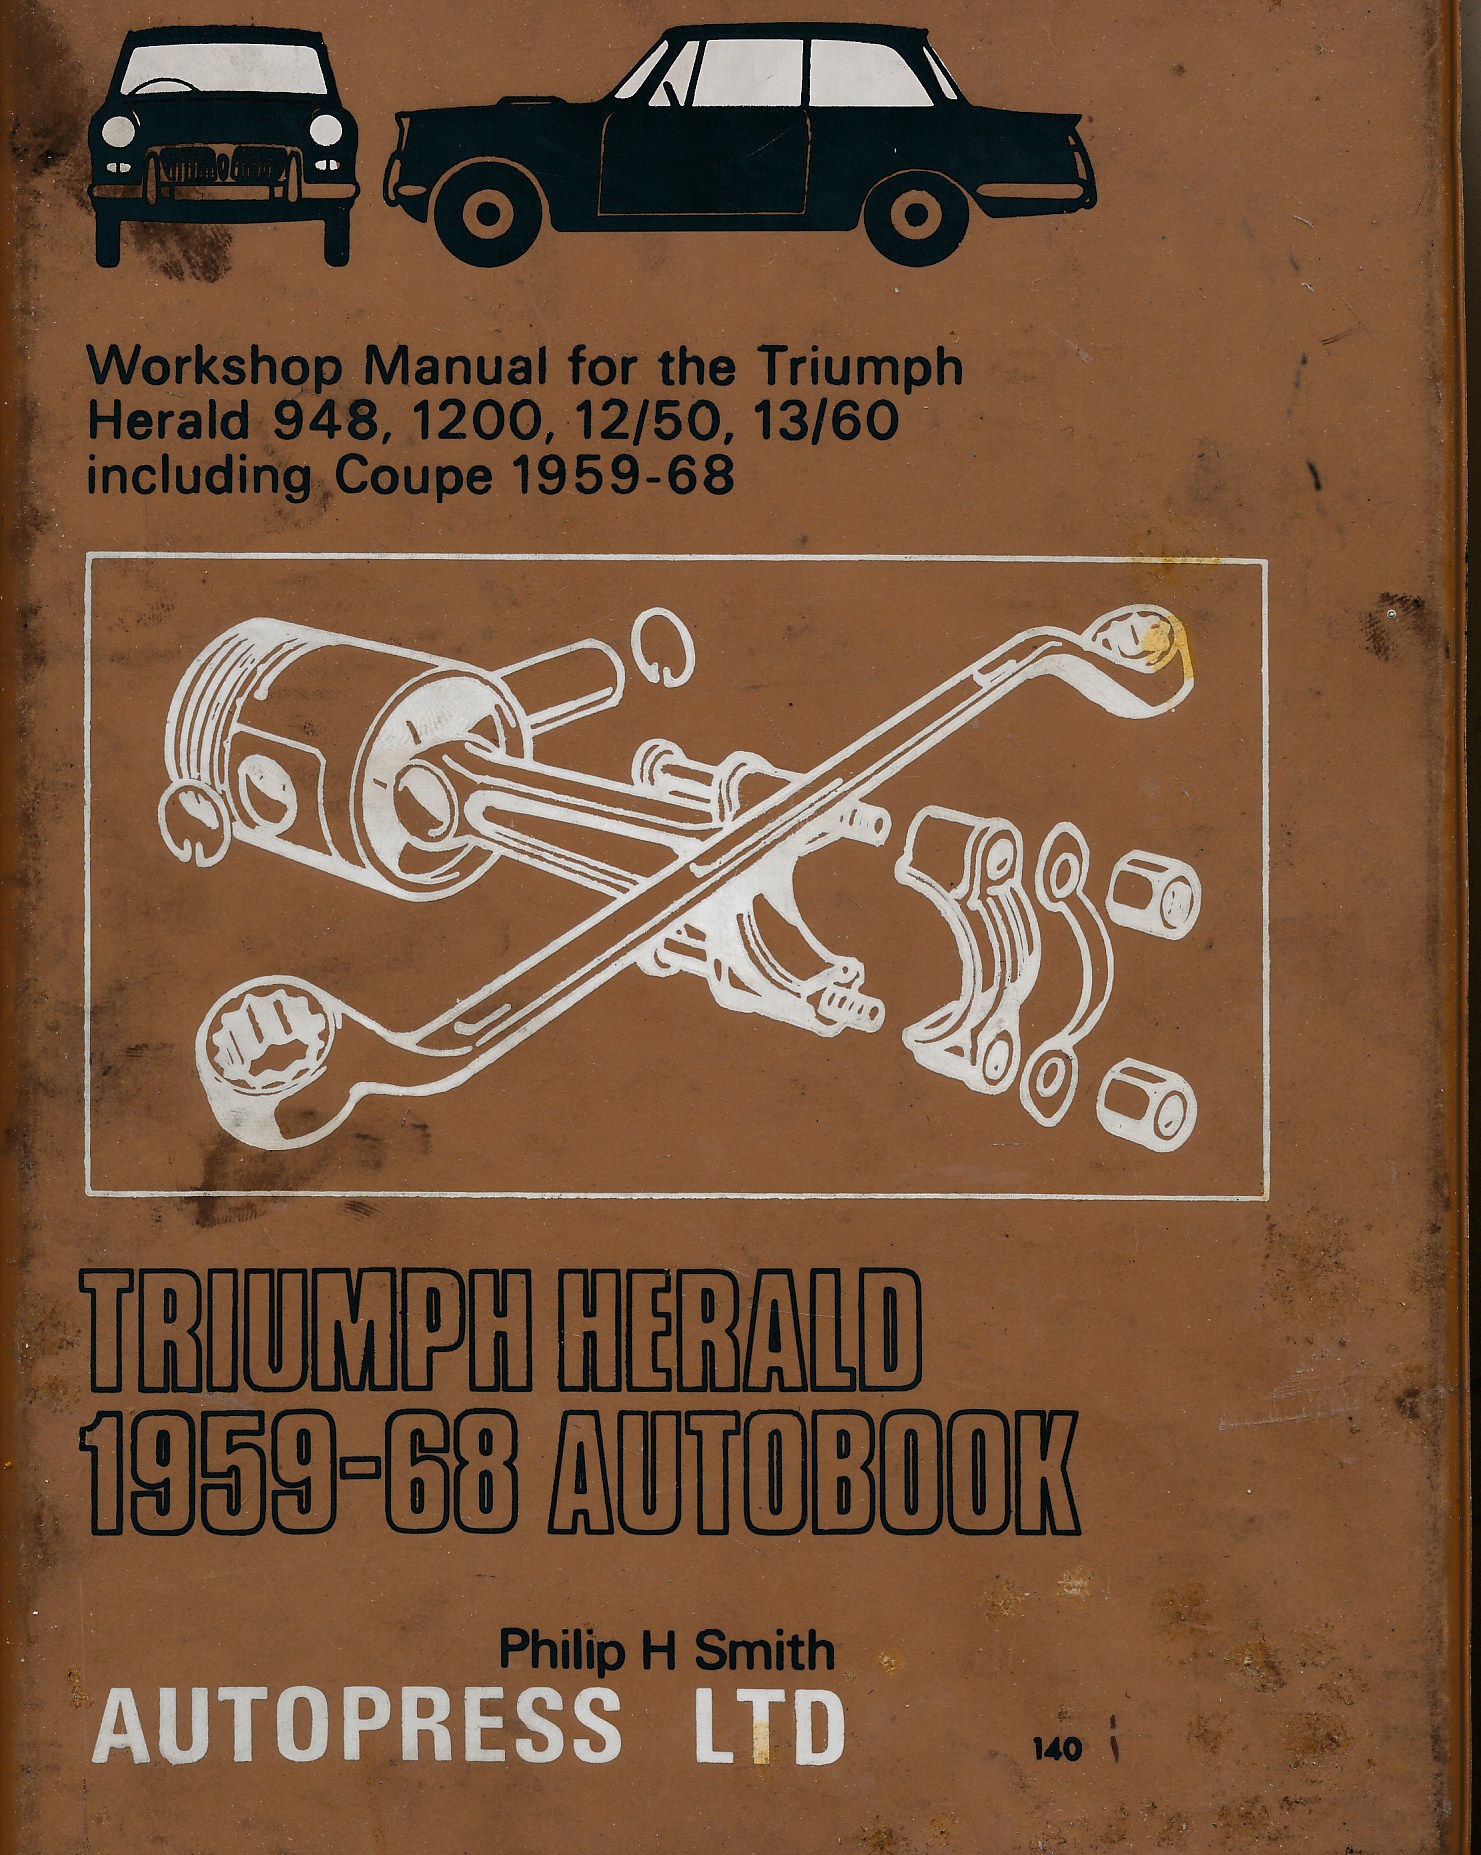 SMITH, PHILIP H - Triumph Herald 1959-68 Autobook